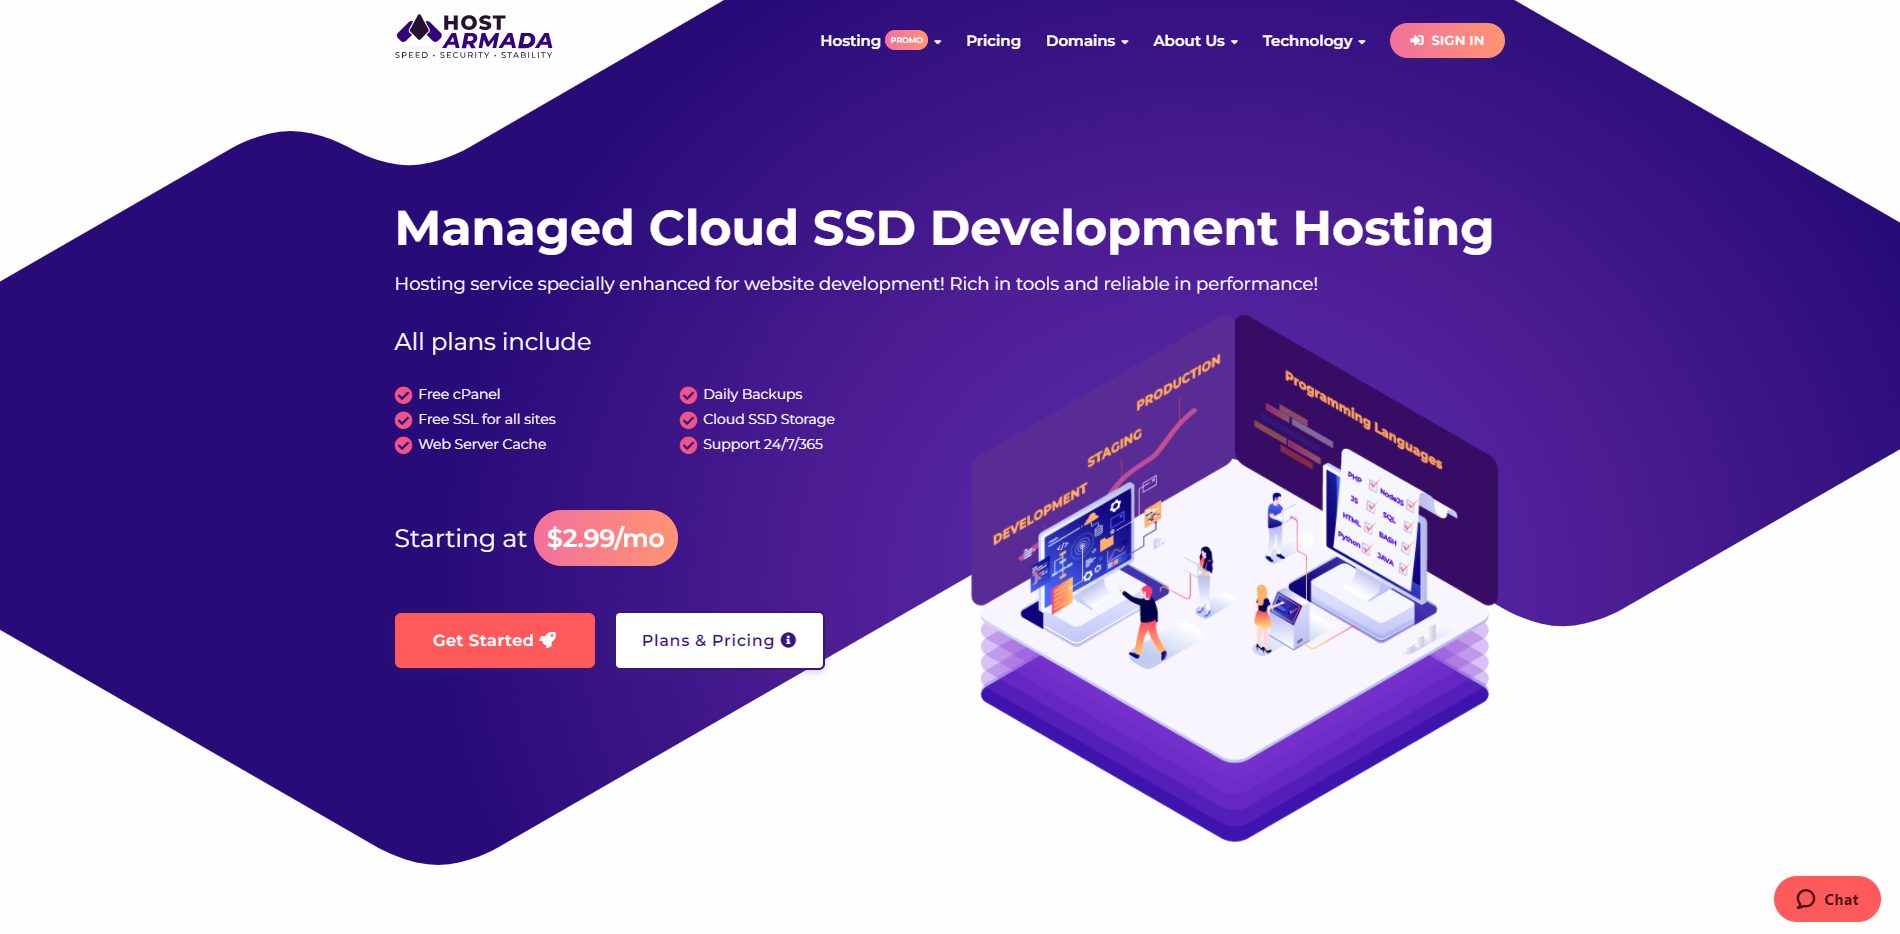 Development hosting